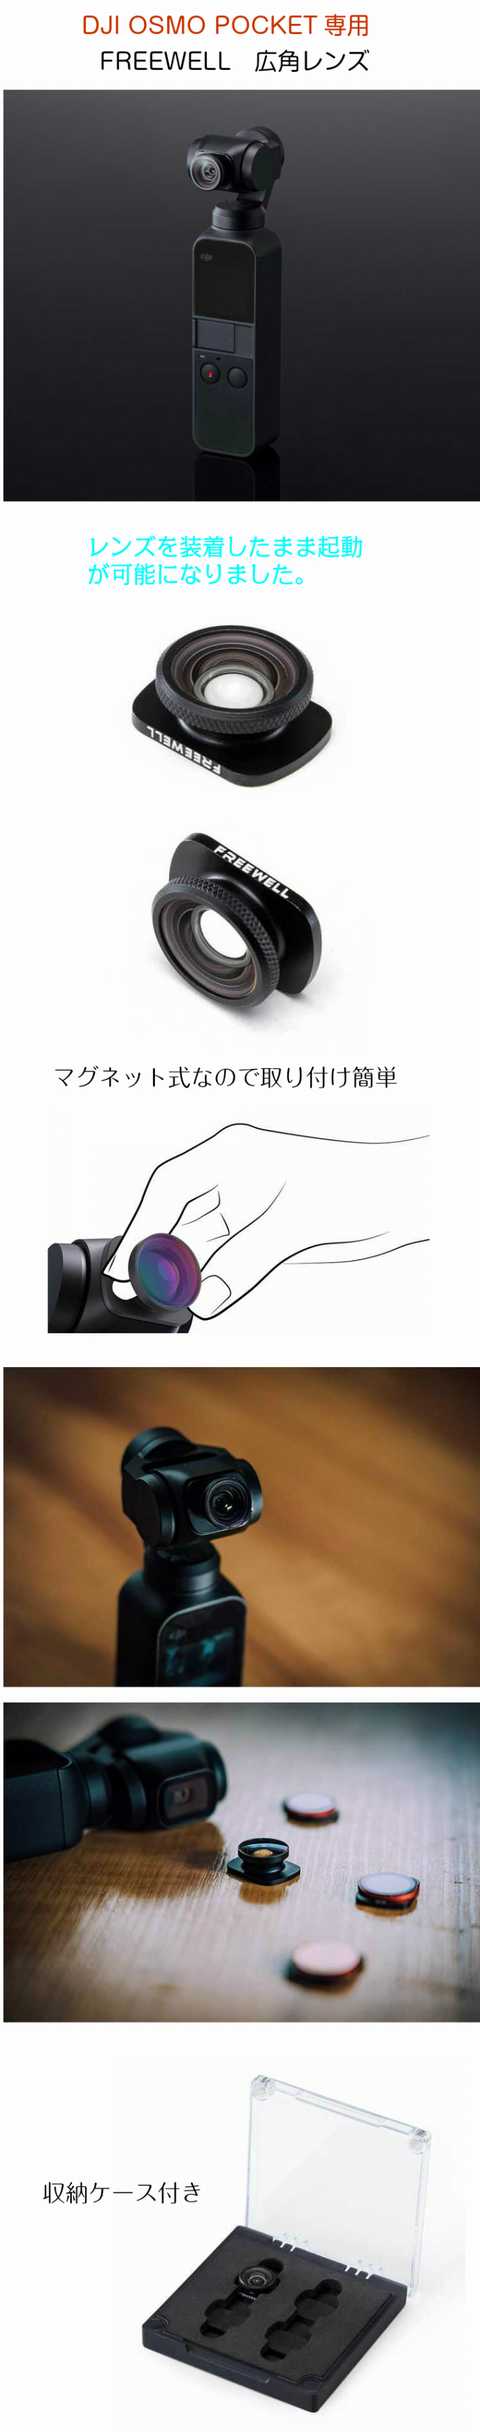 DJI OSMO POCKET専用 広角レンズ FREEWELL 装着したまま起動できる ...